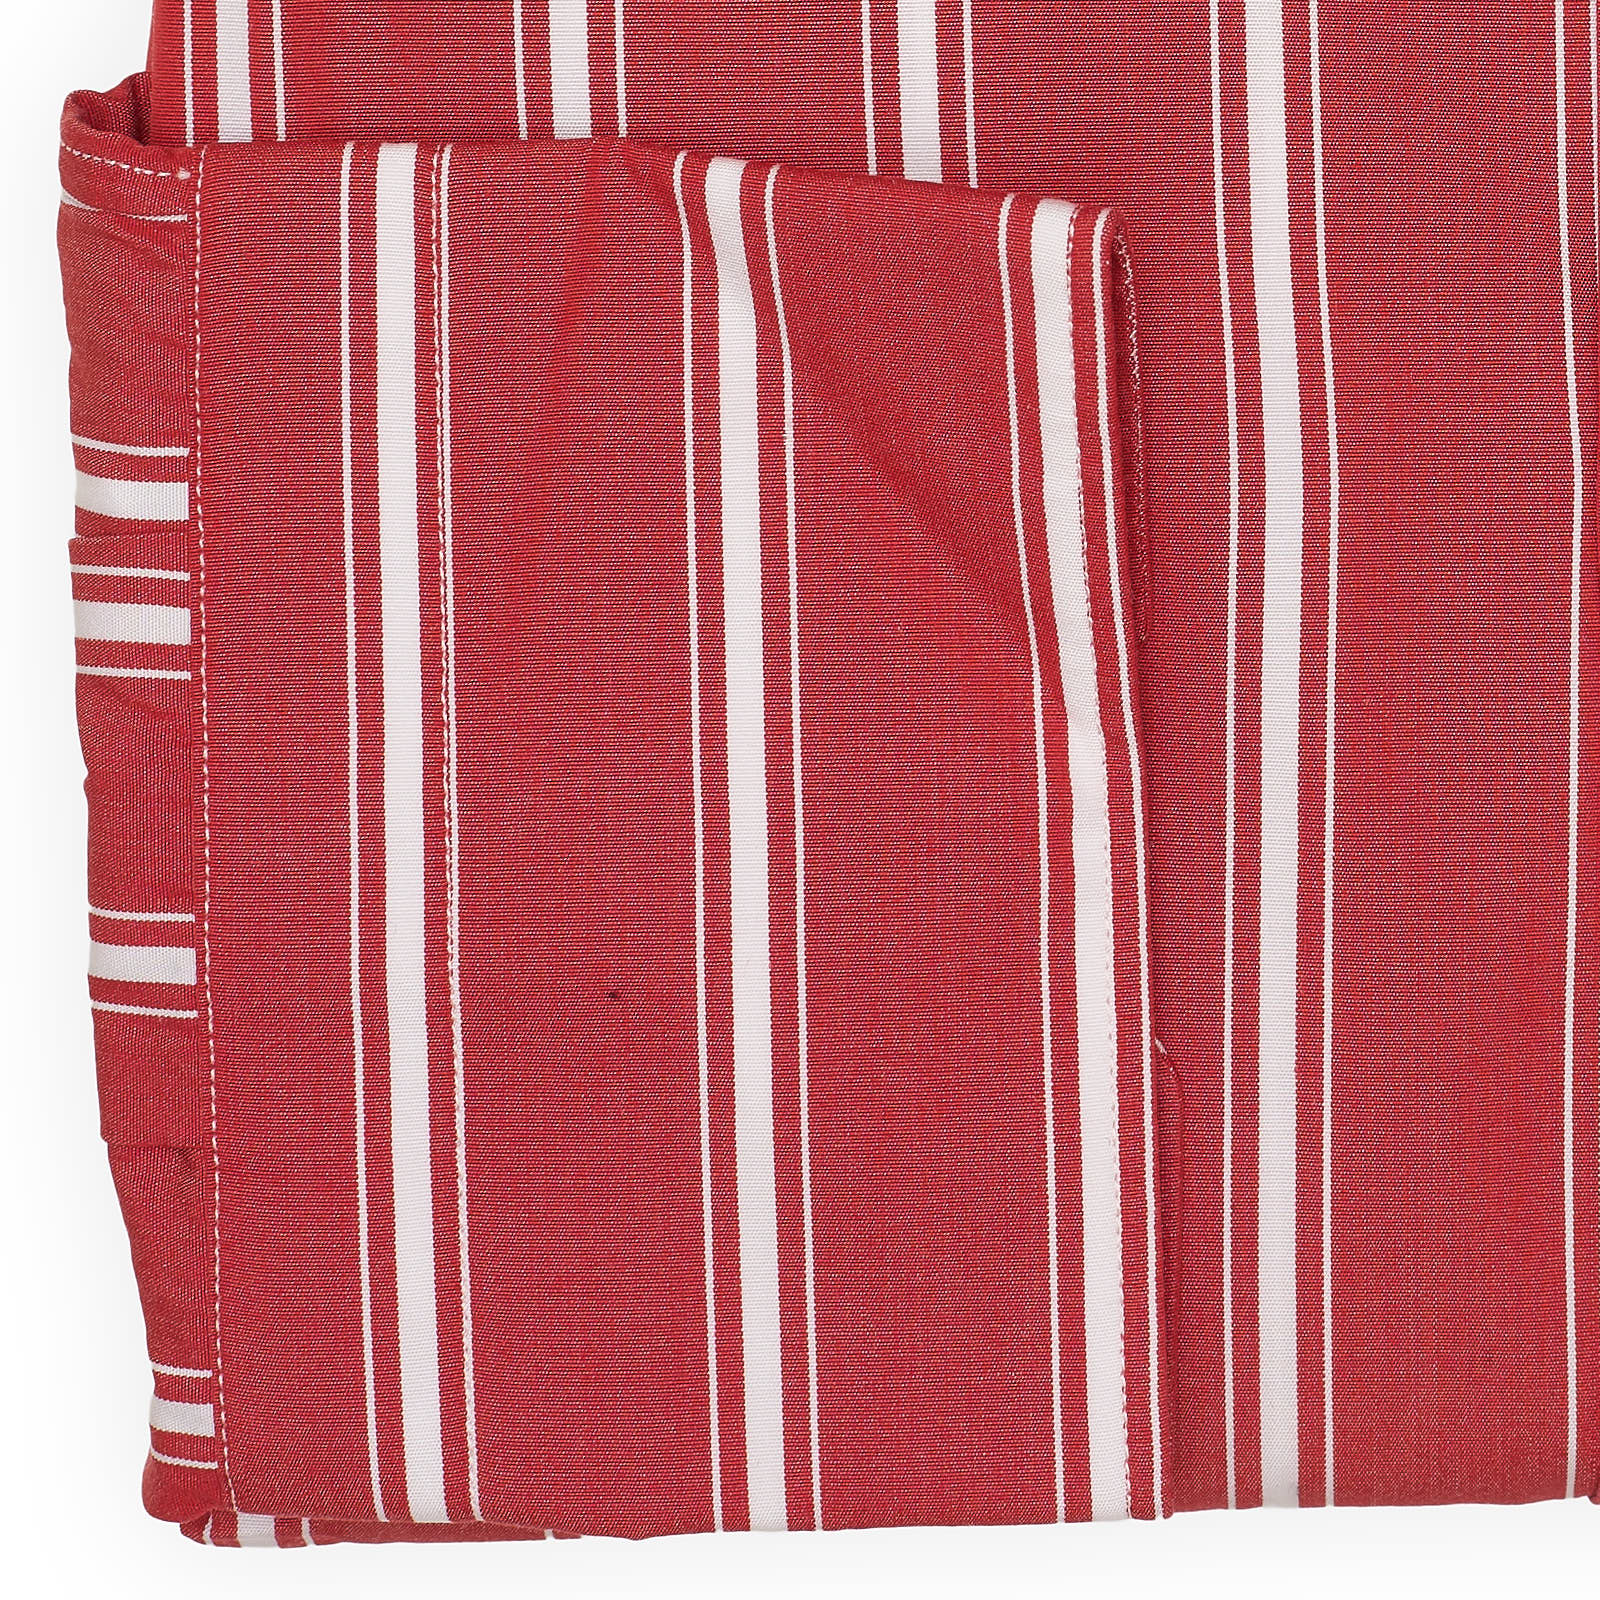 VANNUCCI Milano White Striped Cotton Dress Shirt EU 40 NEW US 15.75